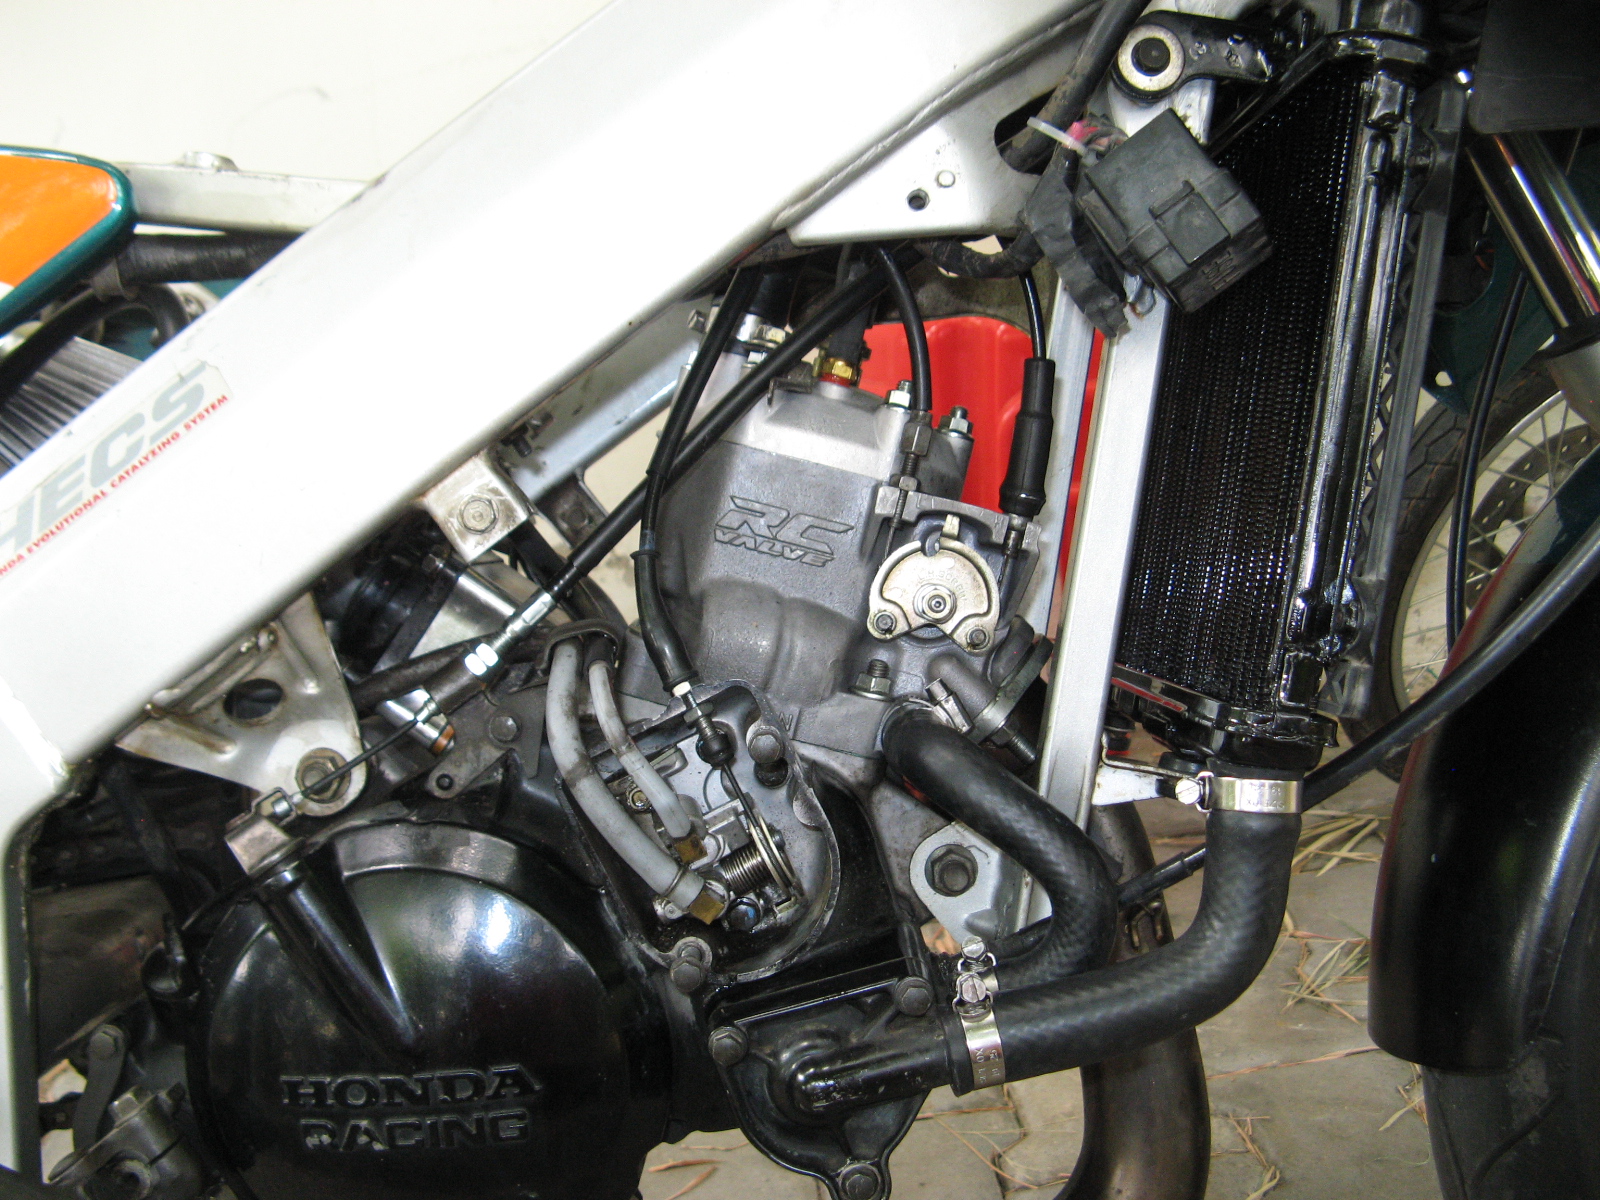 Modified Honda Nsr 150 Sp Repsol Pro Arm 1996 Thai Motorcycles